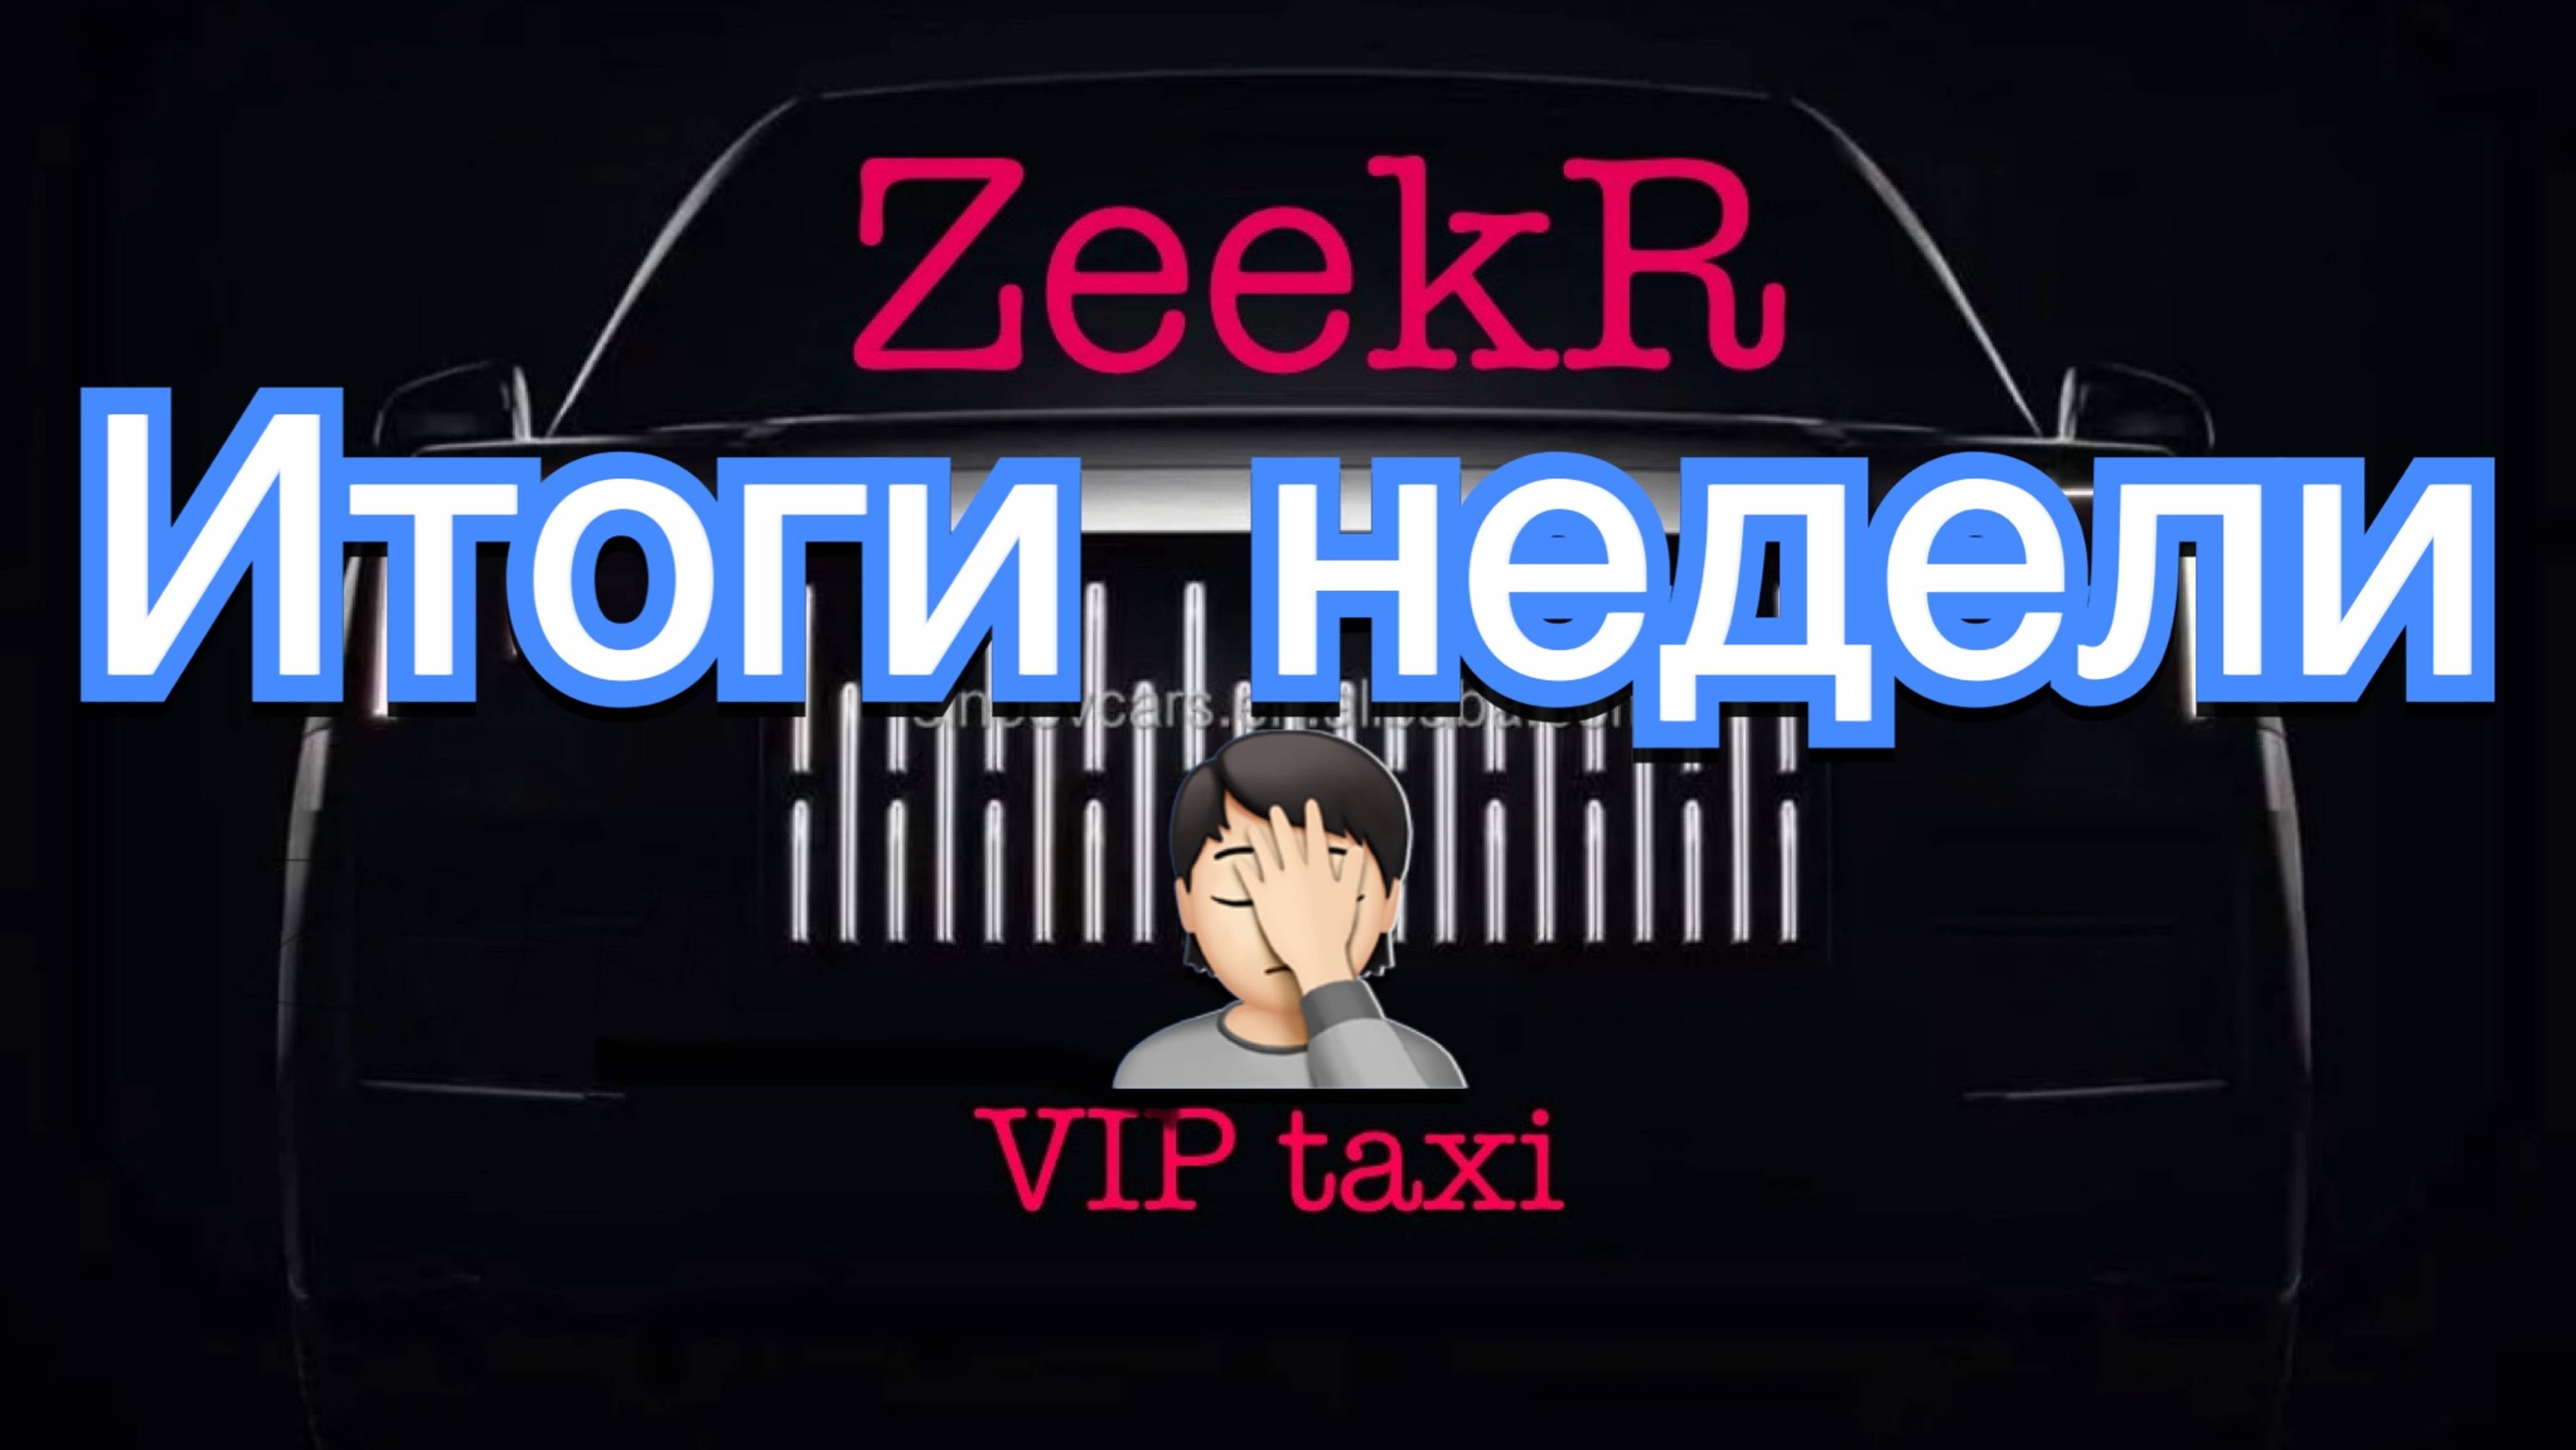 итоги недели  /таксую на zeekr009/elite taxi/яндекс такси#elite #taxi #vip #zeekr #yandextaxi